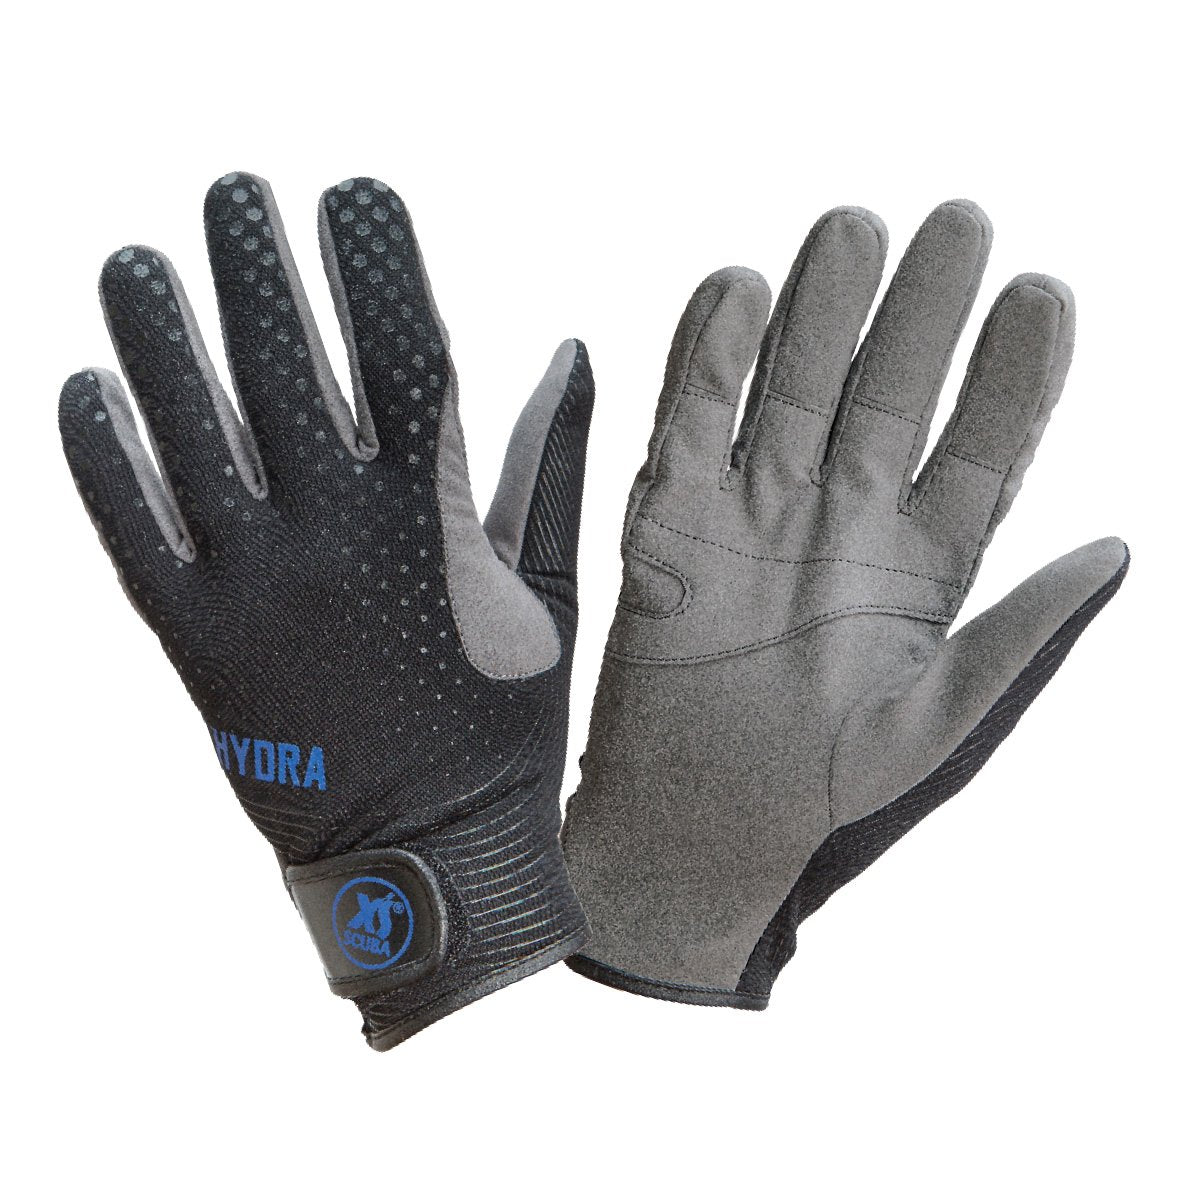 XS Scuba Hydra Diving Gloves